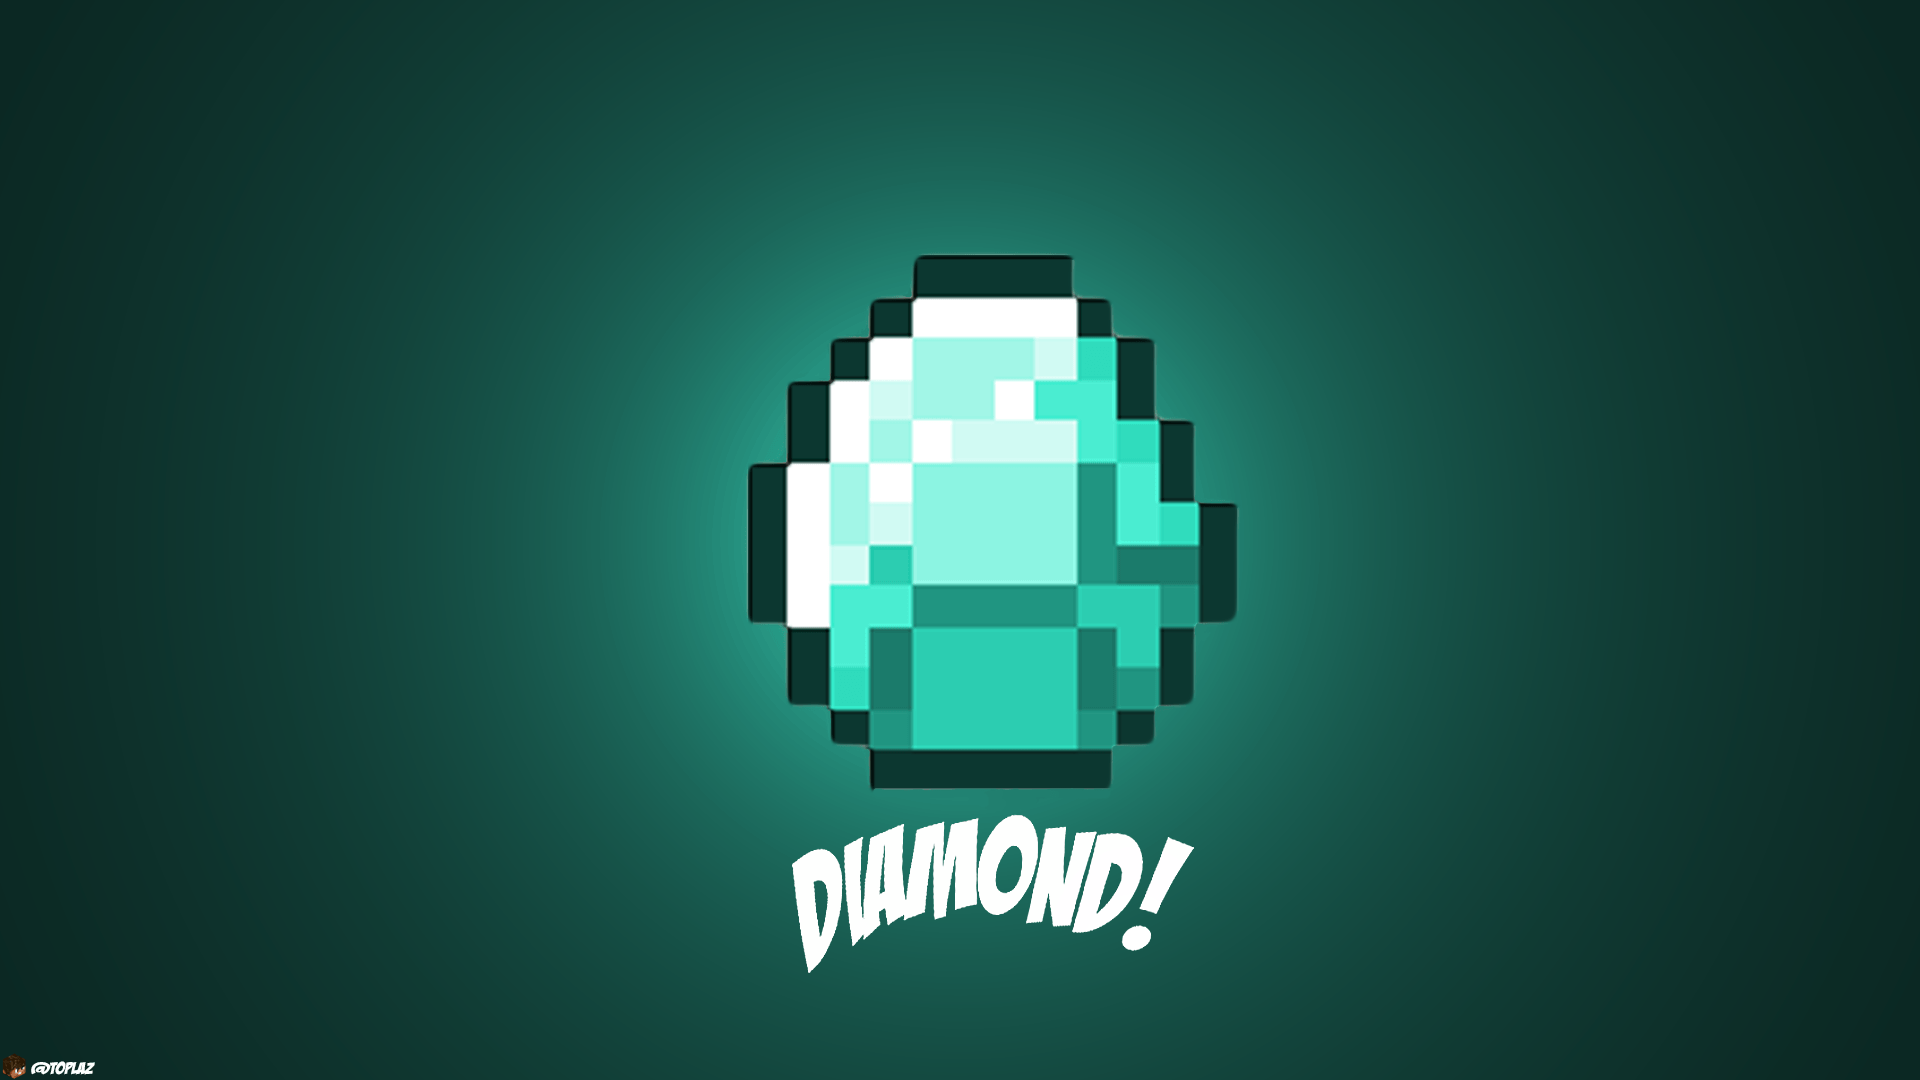 Diamond! Full HD Wallpaper and Background Imagex1080